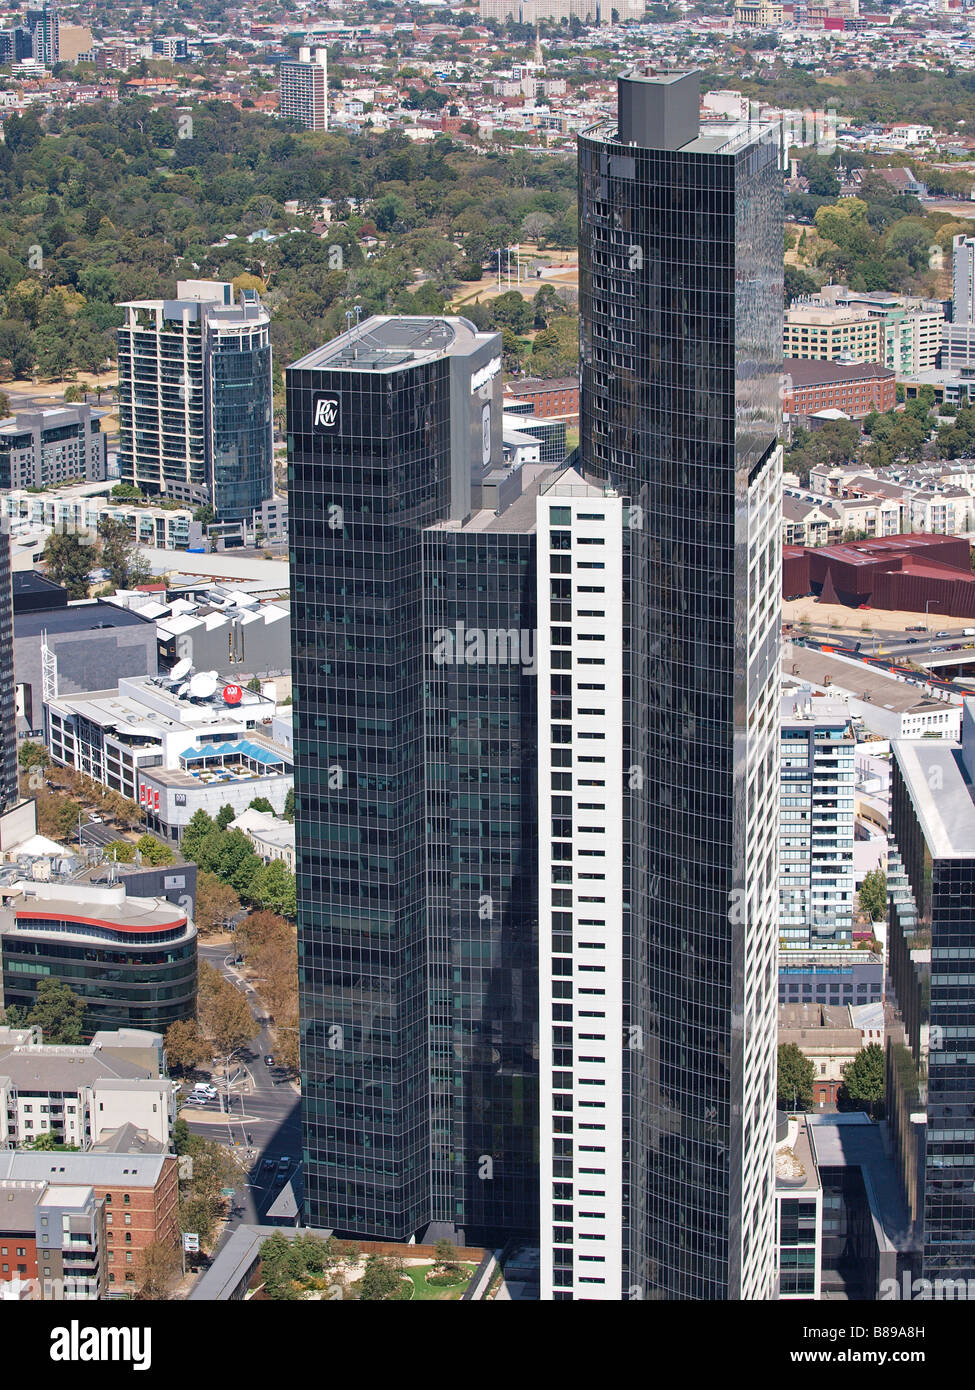 AERIEL VIEW OF OFFICE BLOCKS FROM RIALTO TOWERS MELBOURNE VICTORIA AUSTRALIA Stock Photo